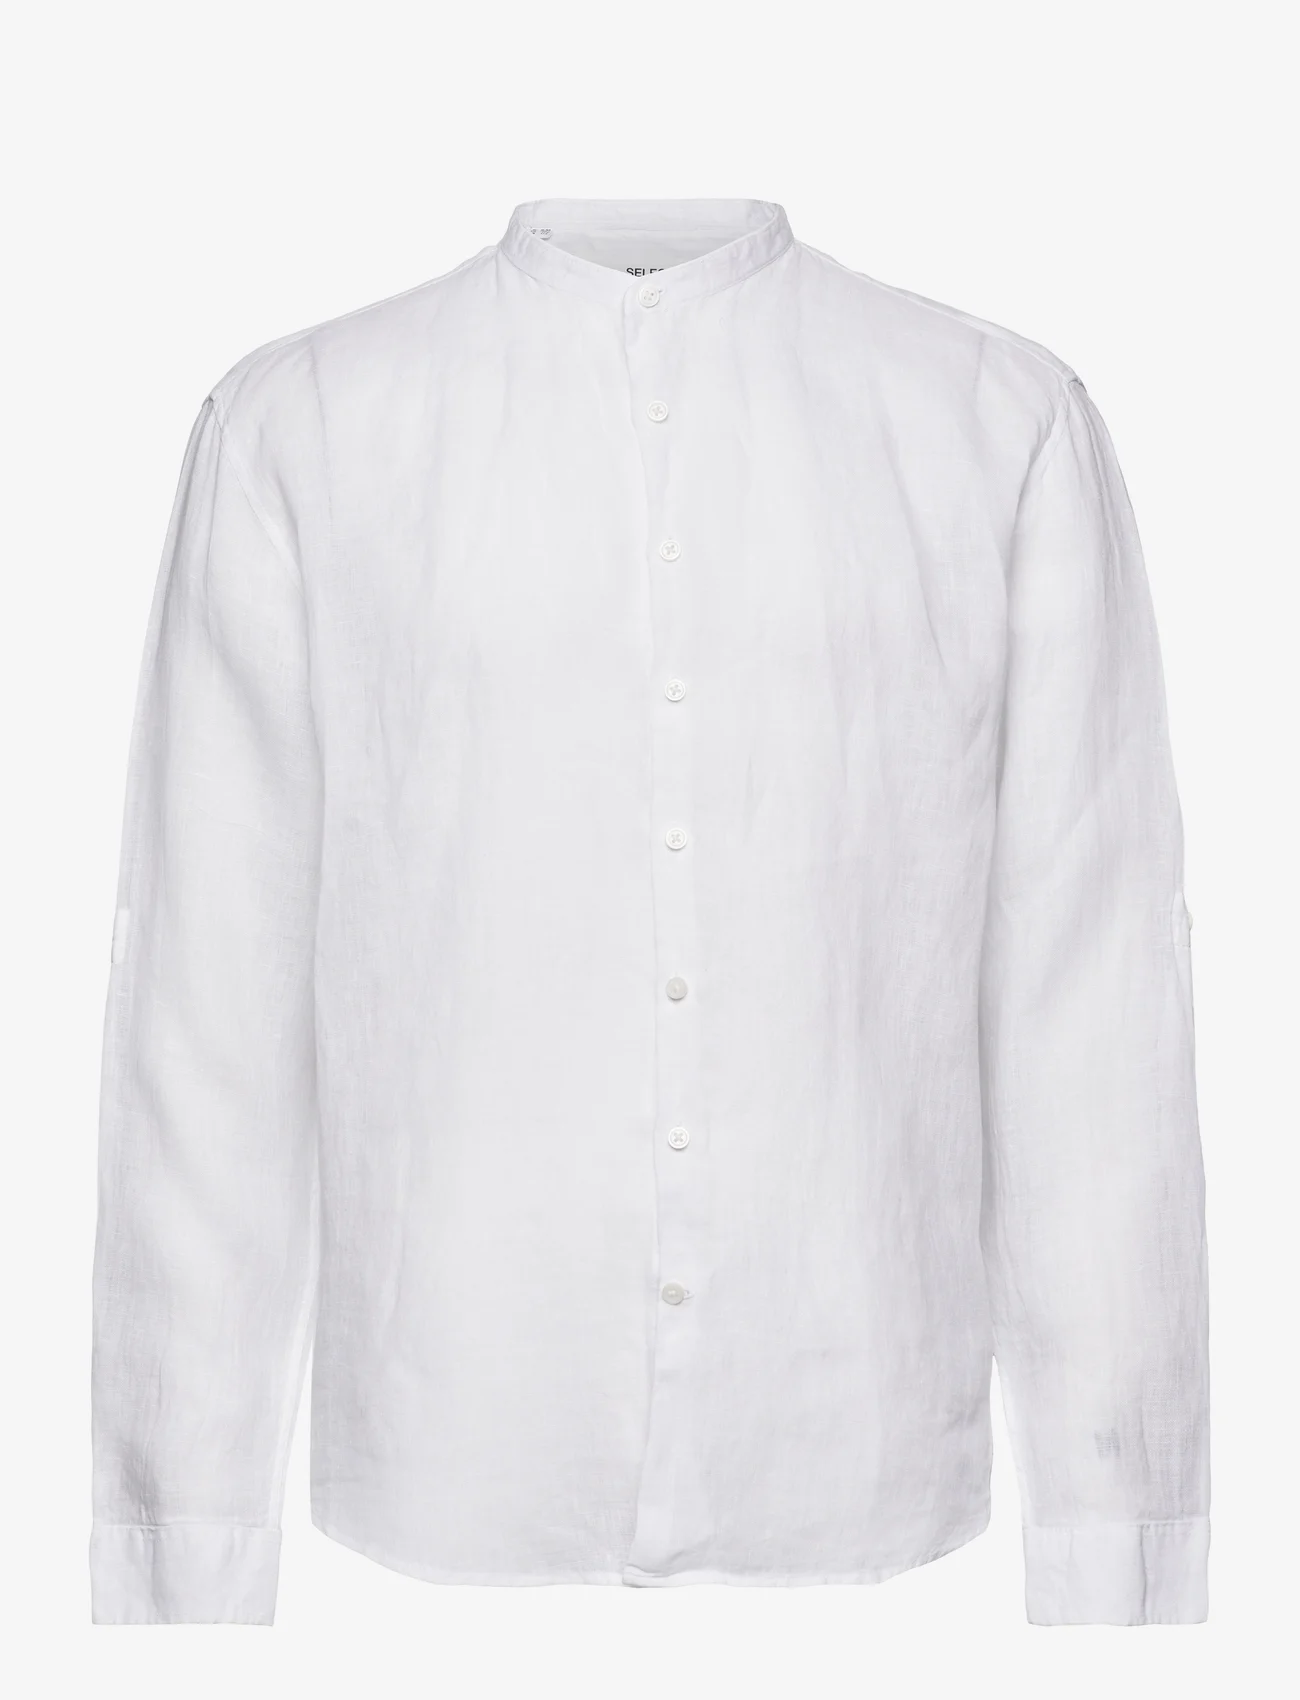 Selected Homme - SLHREGKYLIAN-LINEN SHIRT LS BAND - linen shirts - bright white - 0